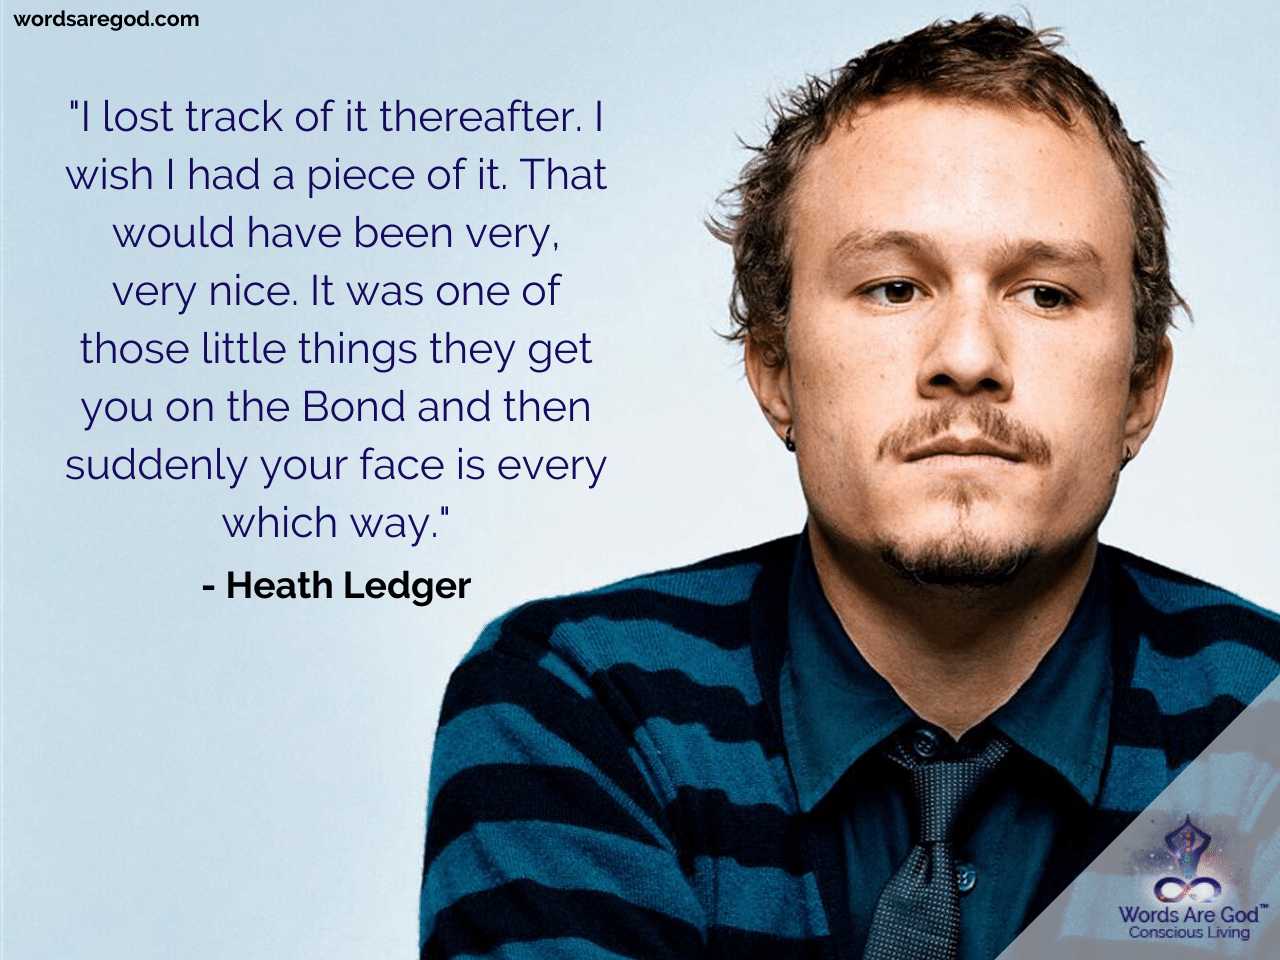 Heath Ledger Best Quotes